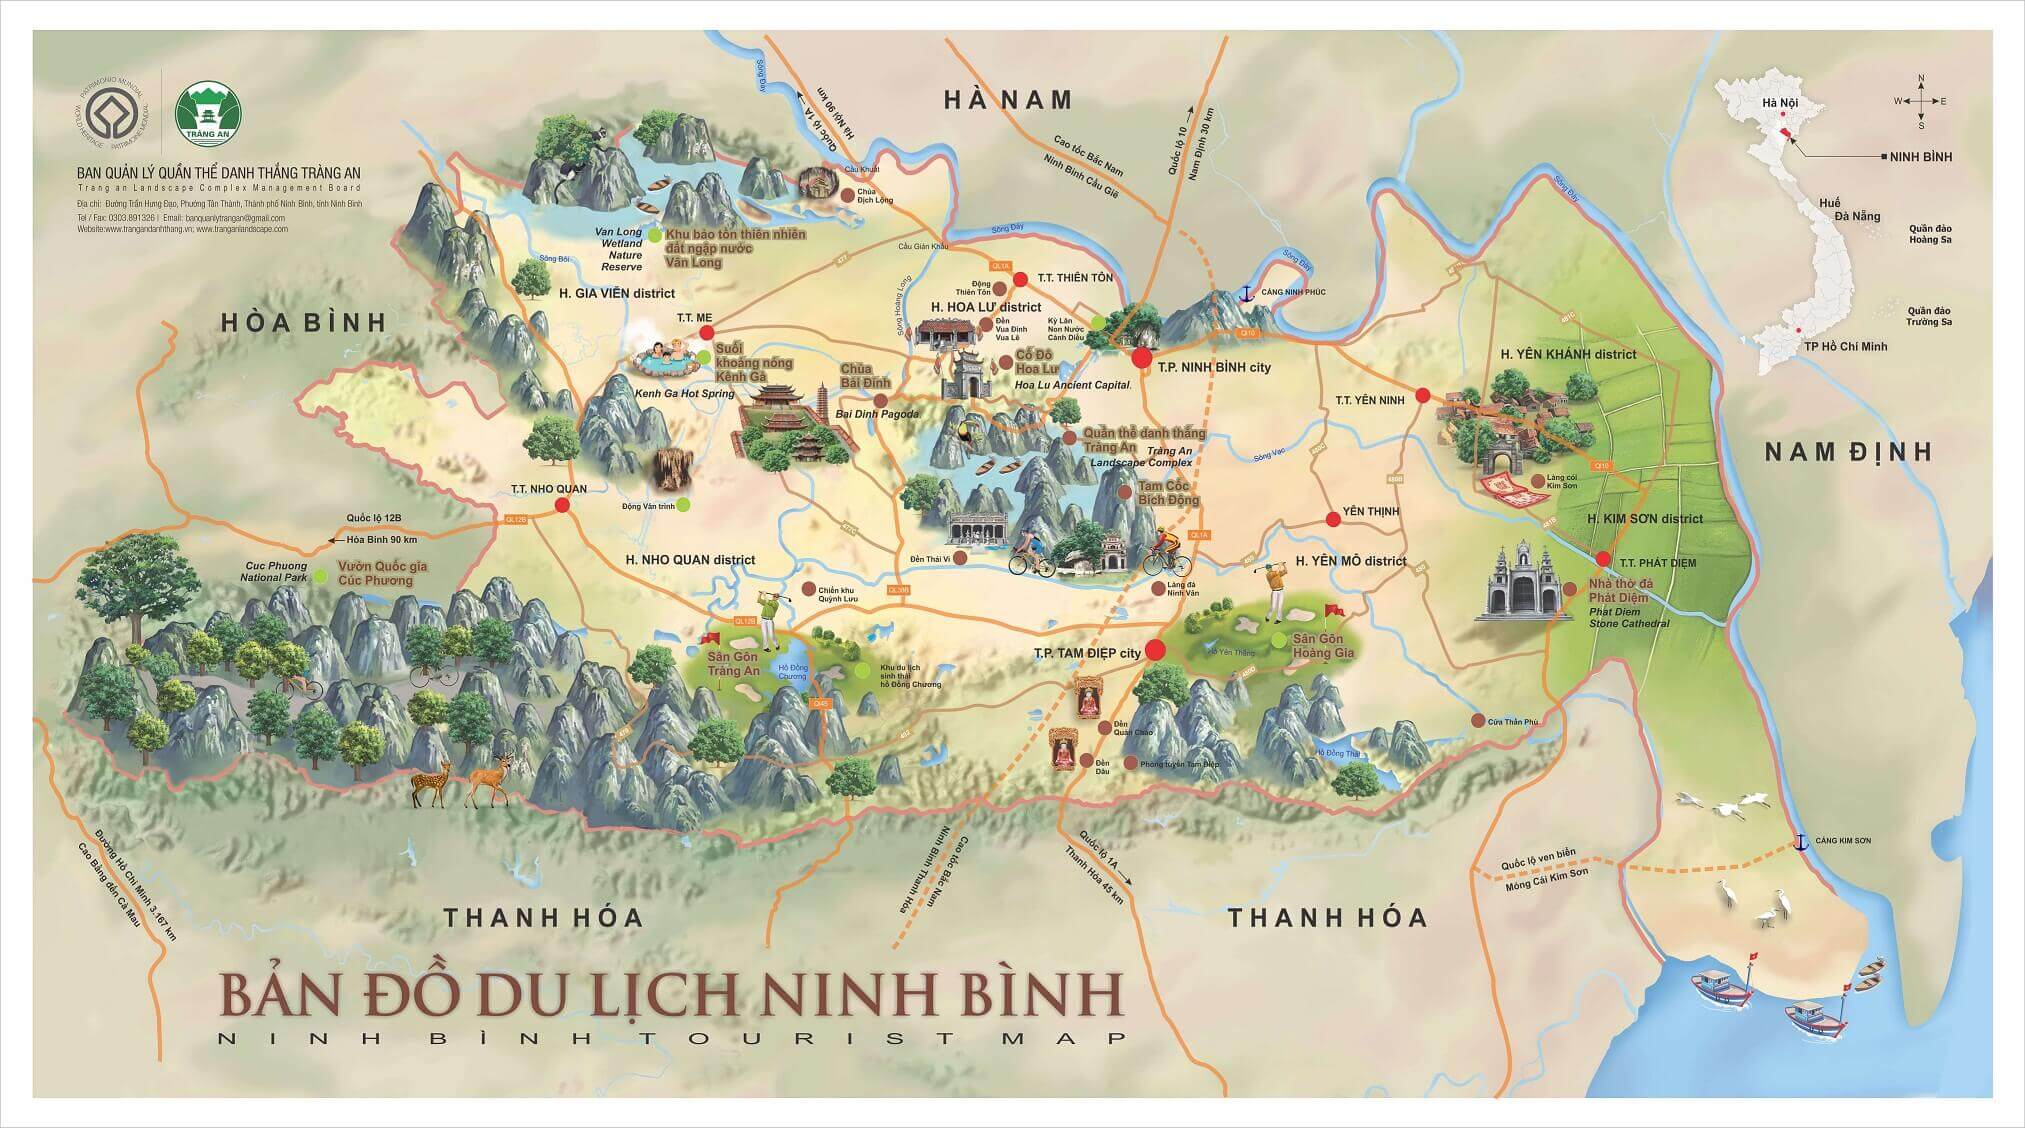 Ninh Binh travel guide map